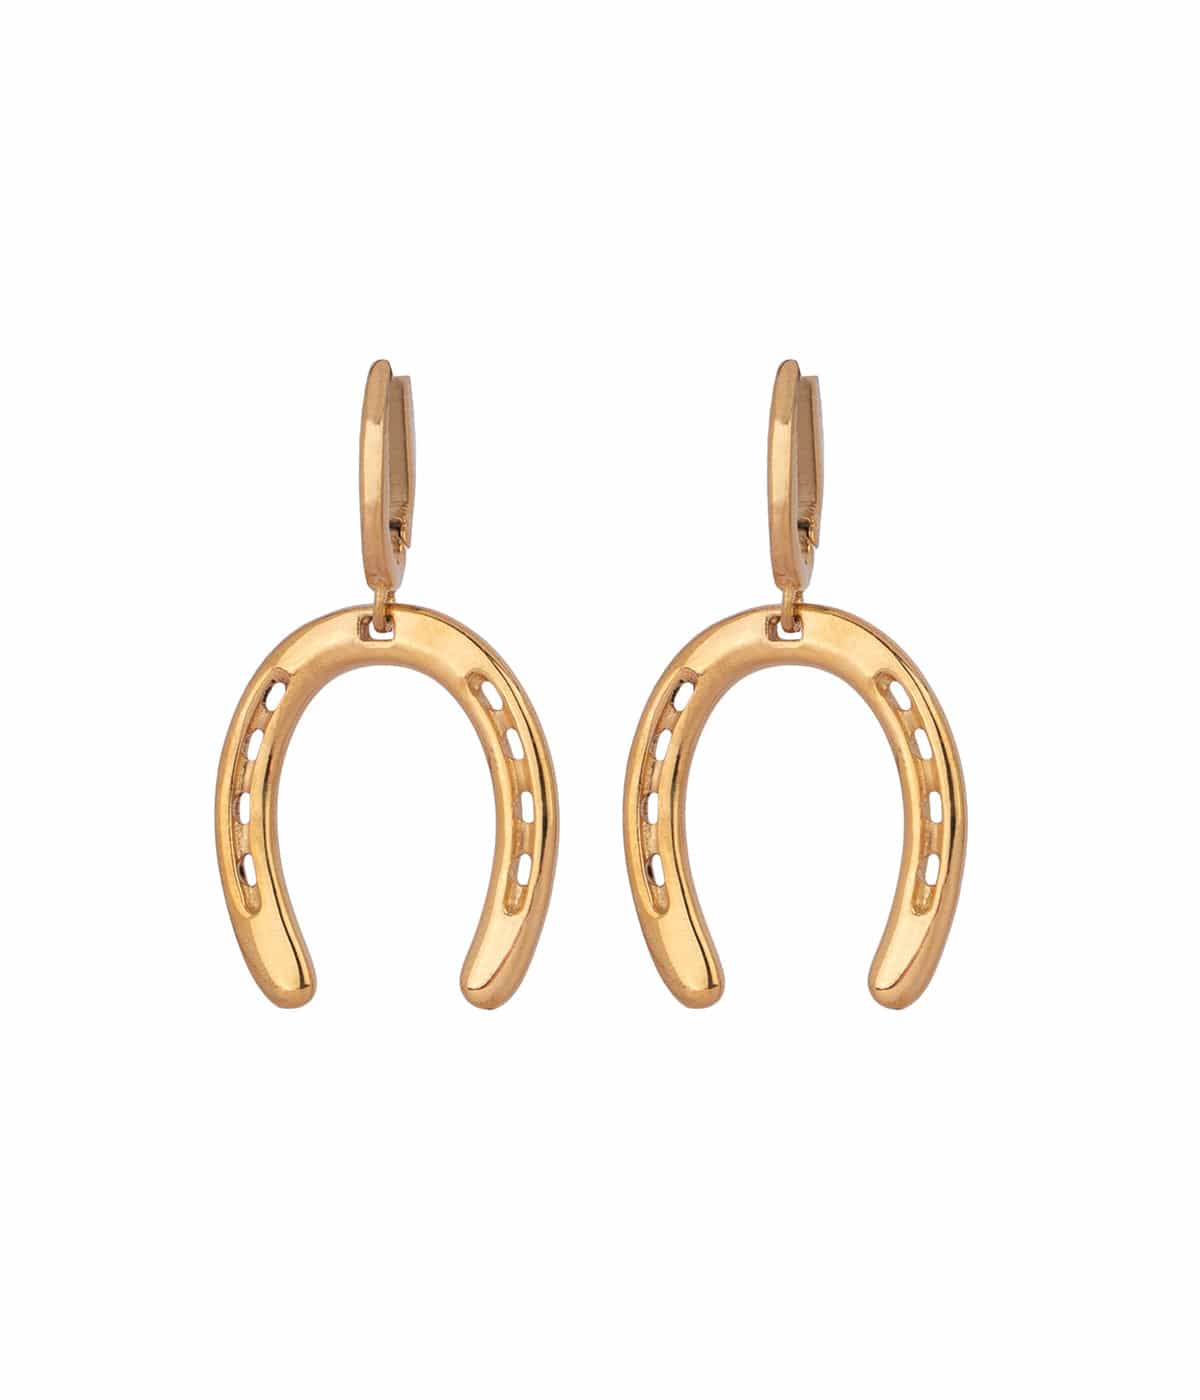 Kush 22k Gold Plated Over Brass Horseshoe Detailing Earrings - ZEWAR Jewelry